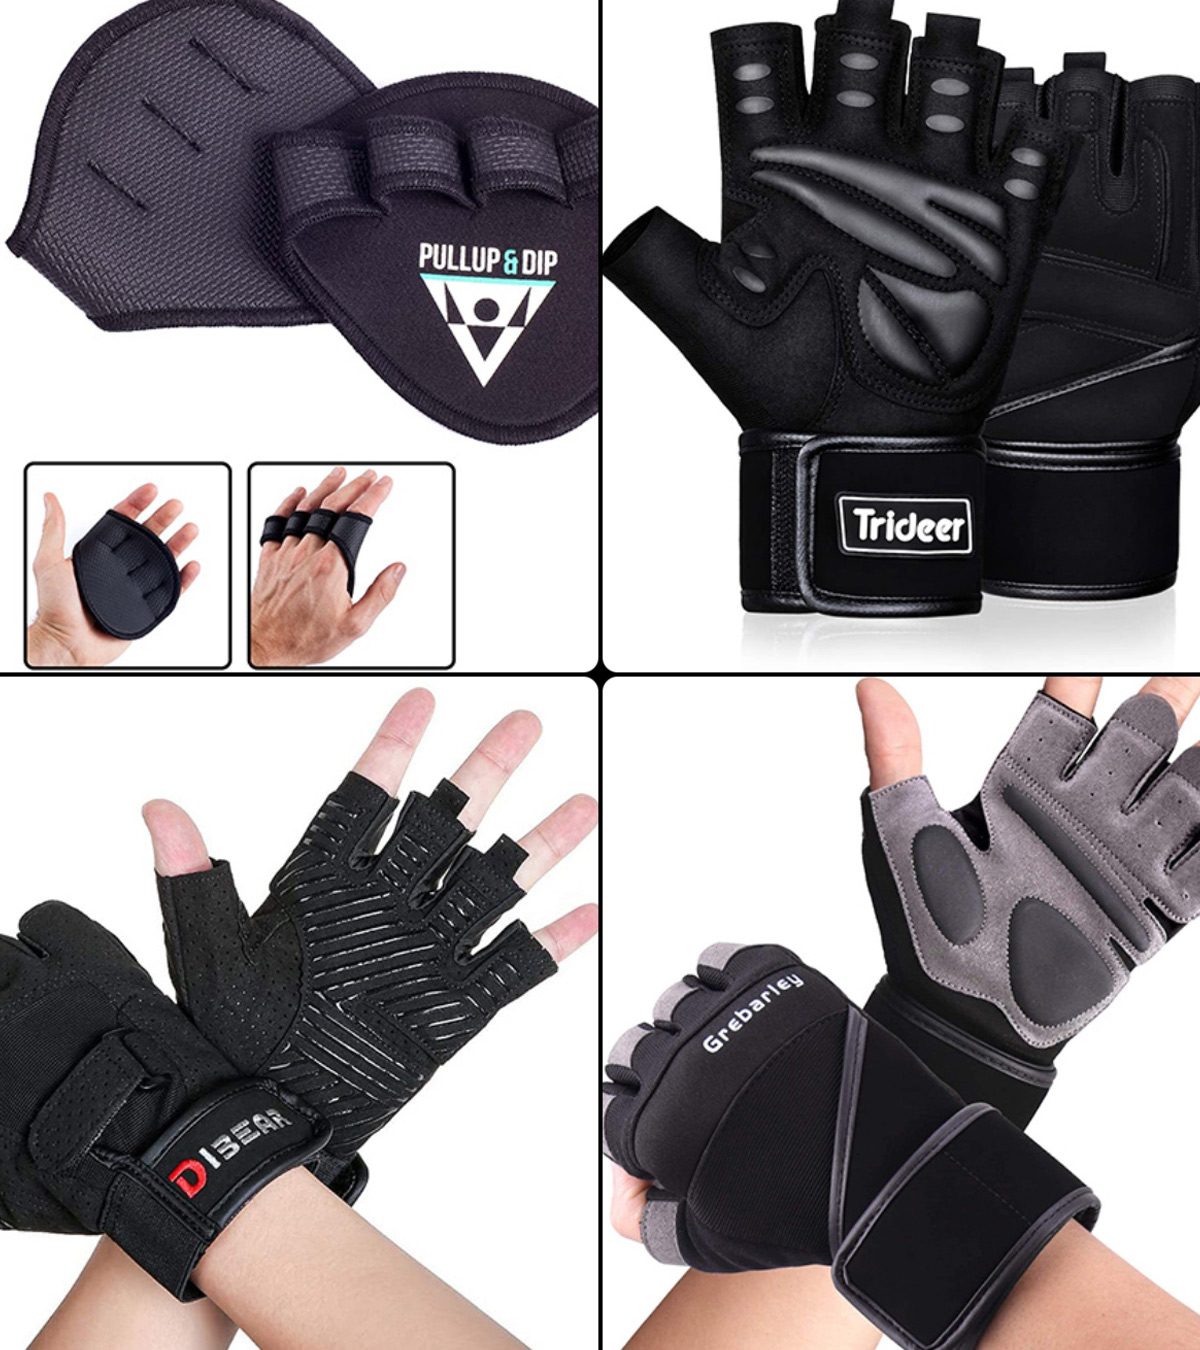 Half Finger – Breathable Lycra & Anti-Slip S Trideer Ultralight Cycling Gloves 